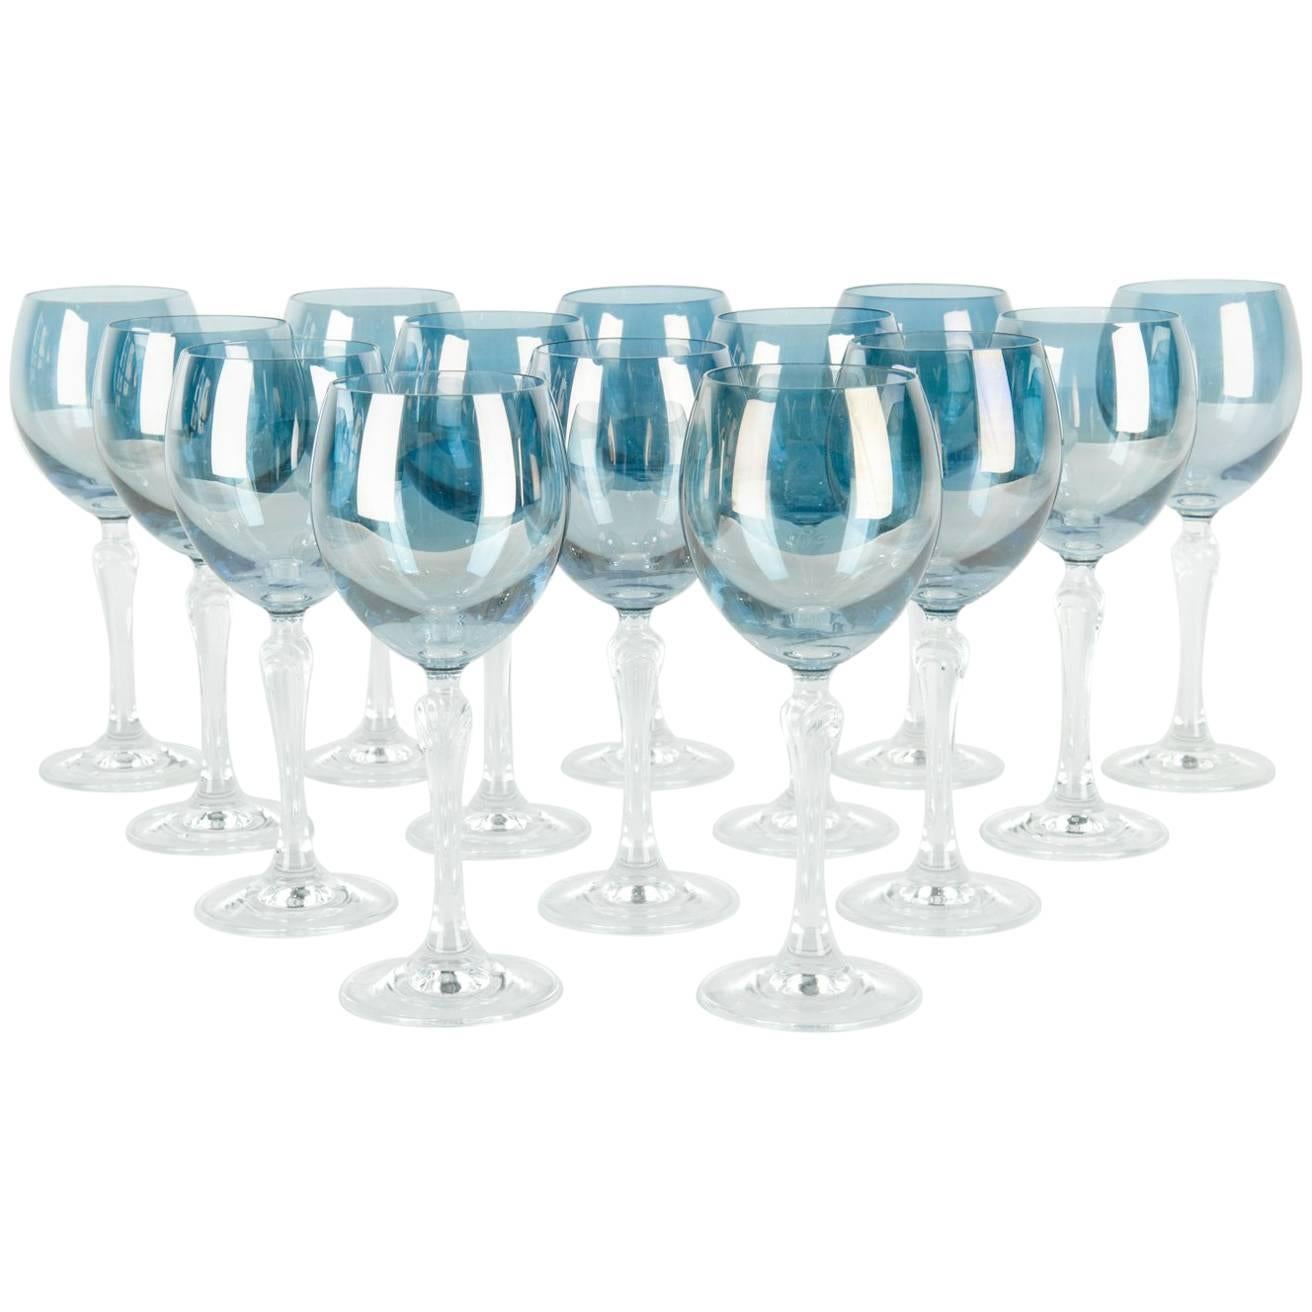 Late 20th Century Iridescent Blue Crystal Glassware Set